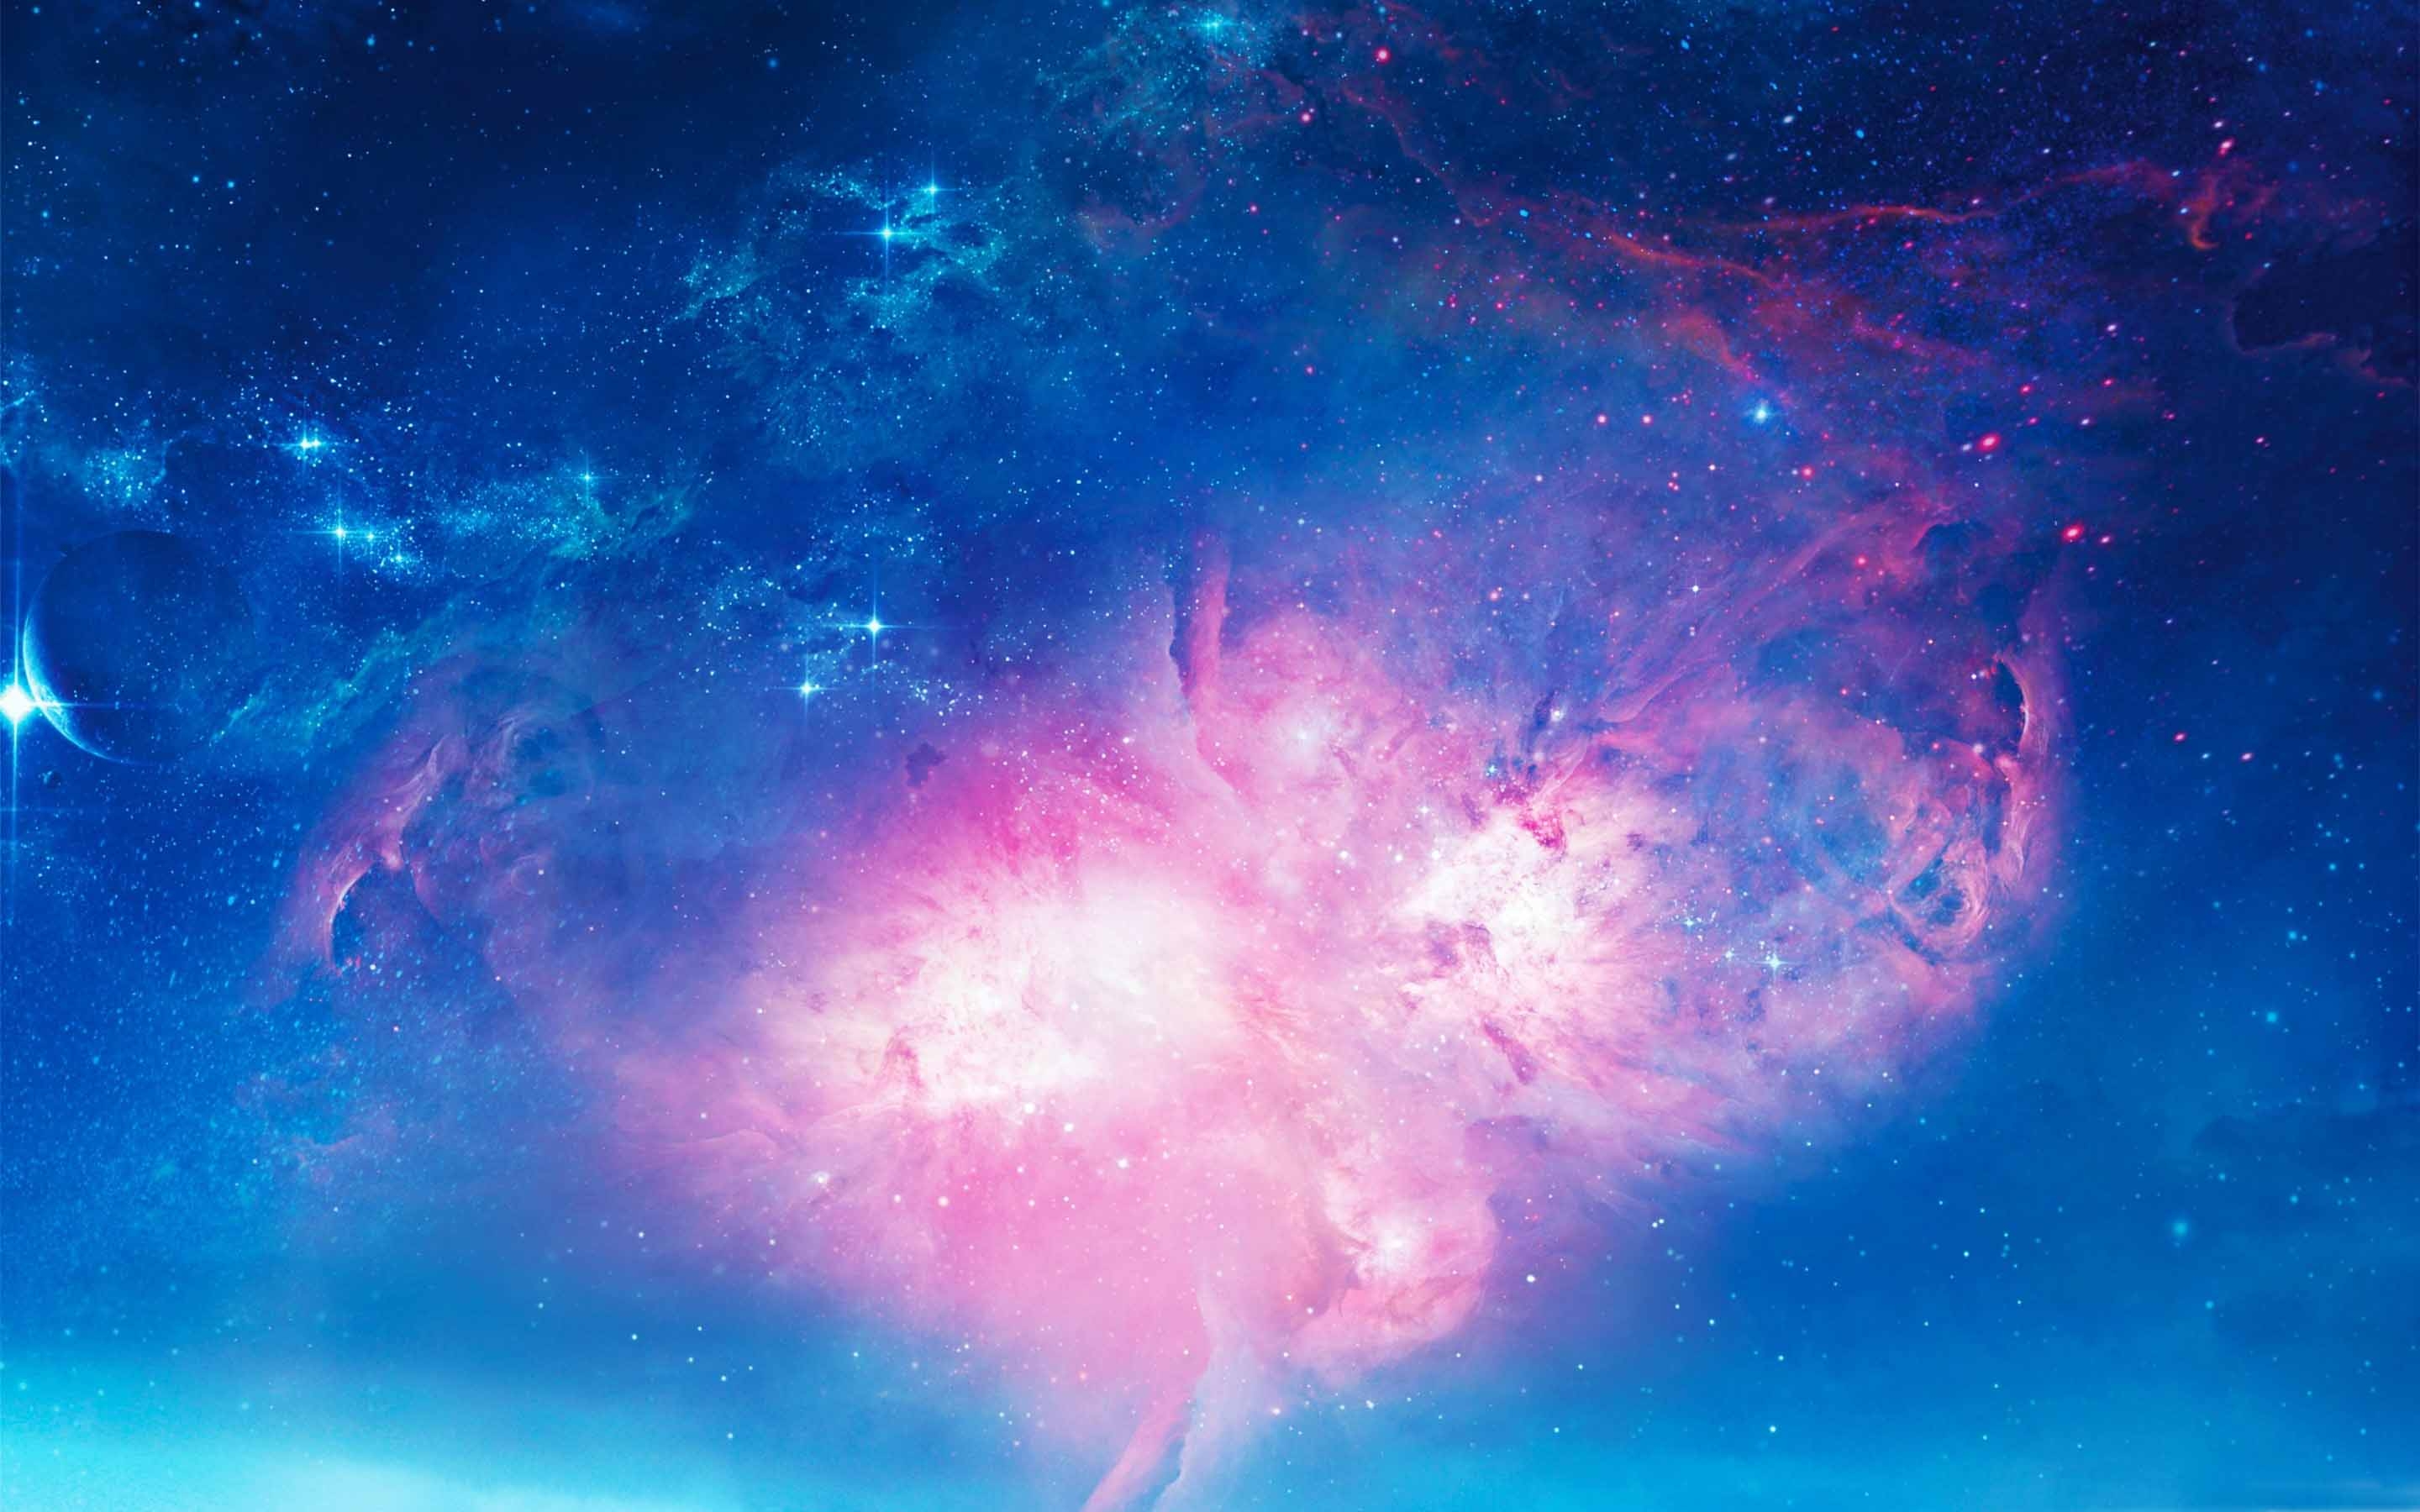 Guardians of the galaxy macbook air wallpaper download